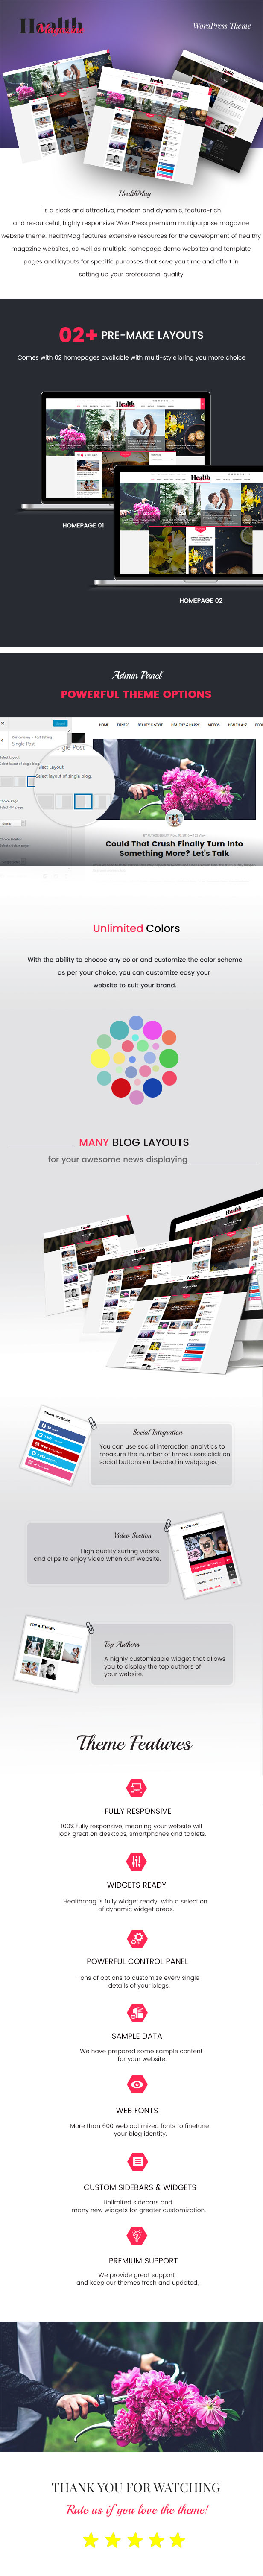 HealthMag - Multipurpose News/Magazine WordPress Theme - 1